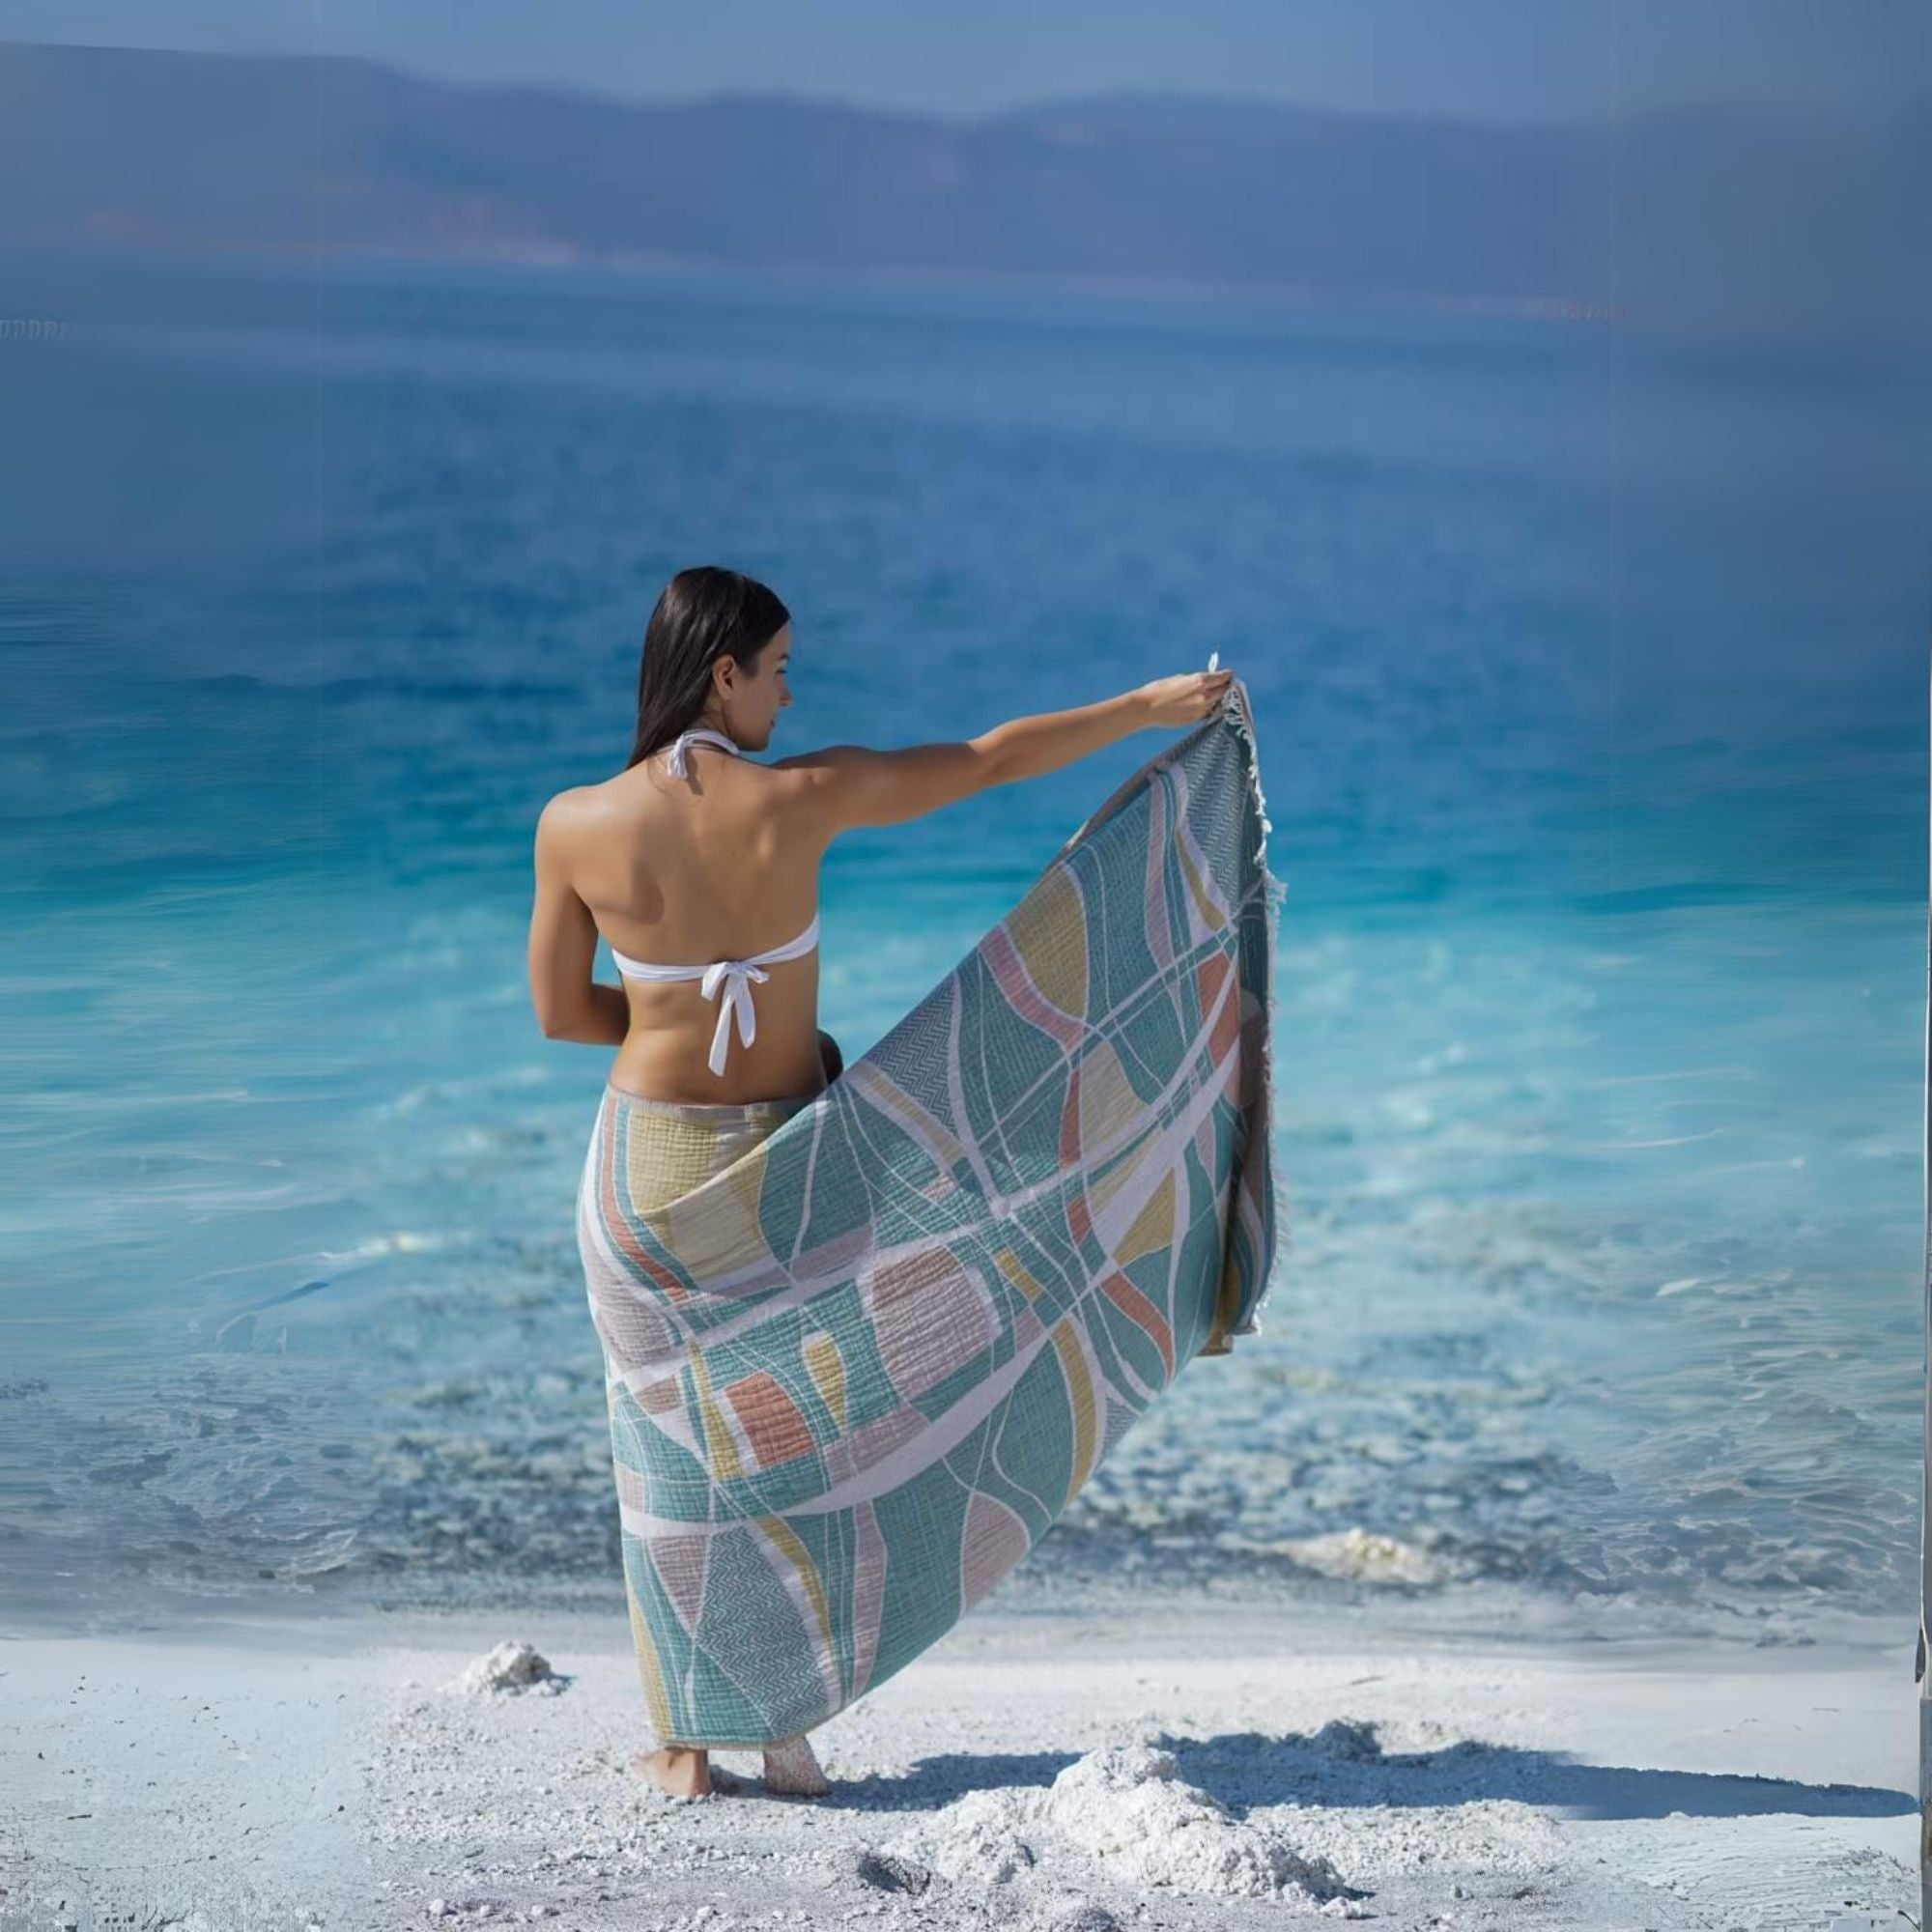 Urla 100% Cotton Turkish Beach Towel and Blanket